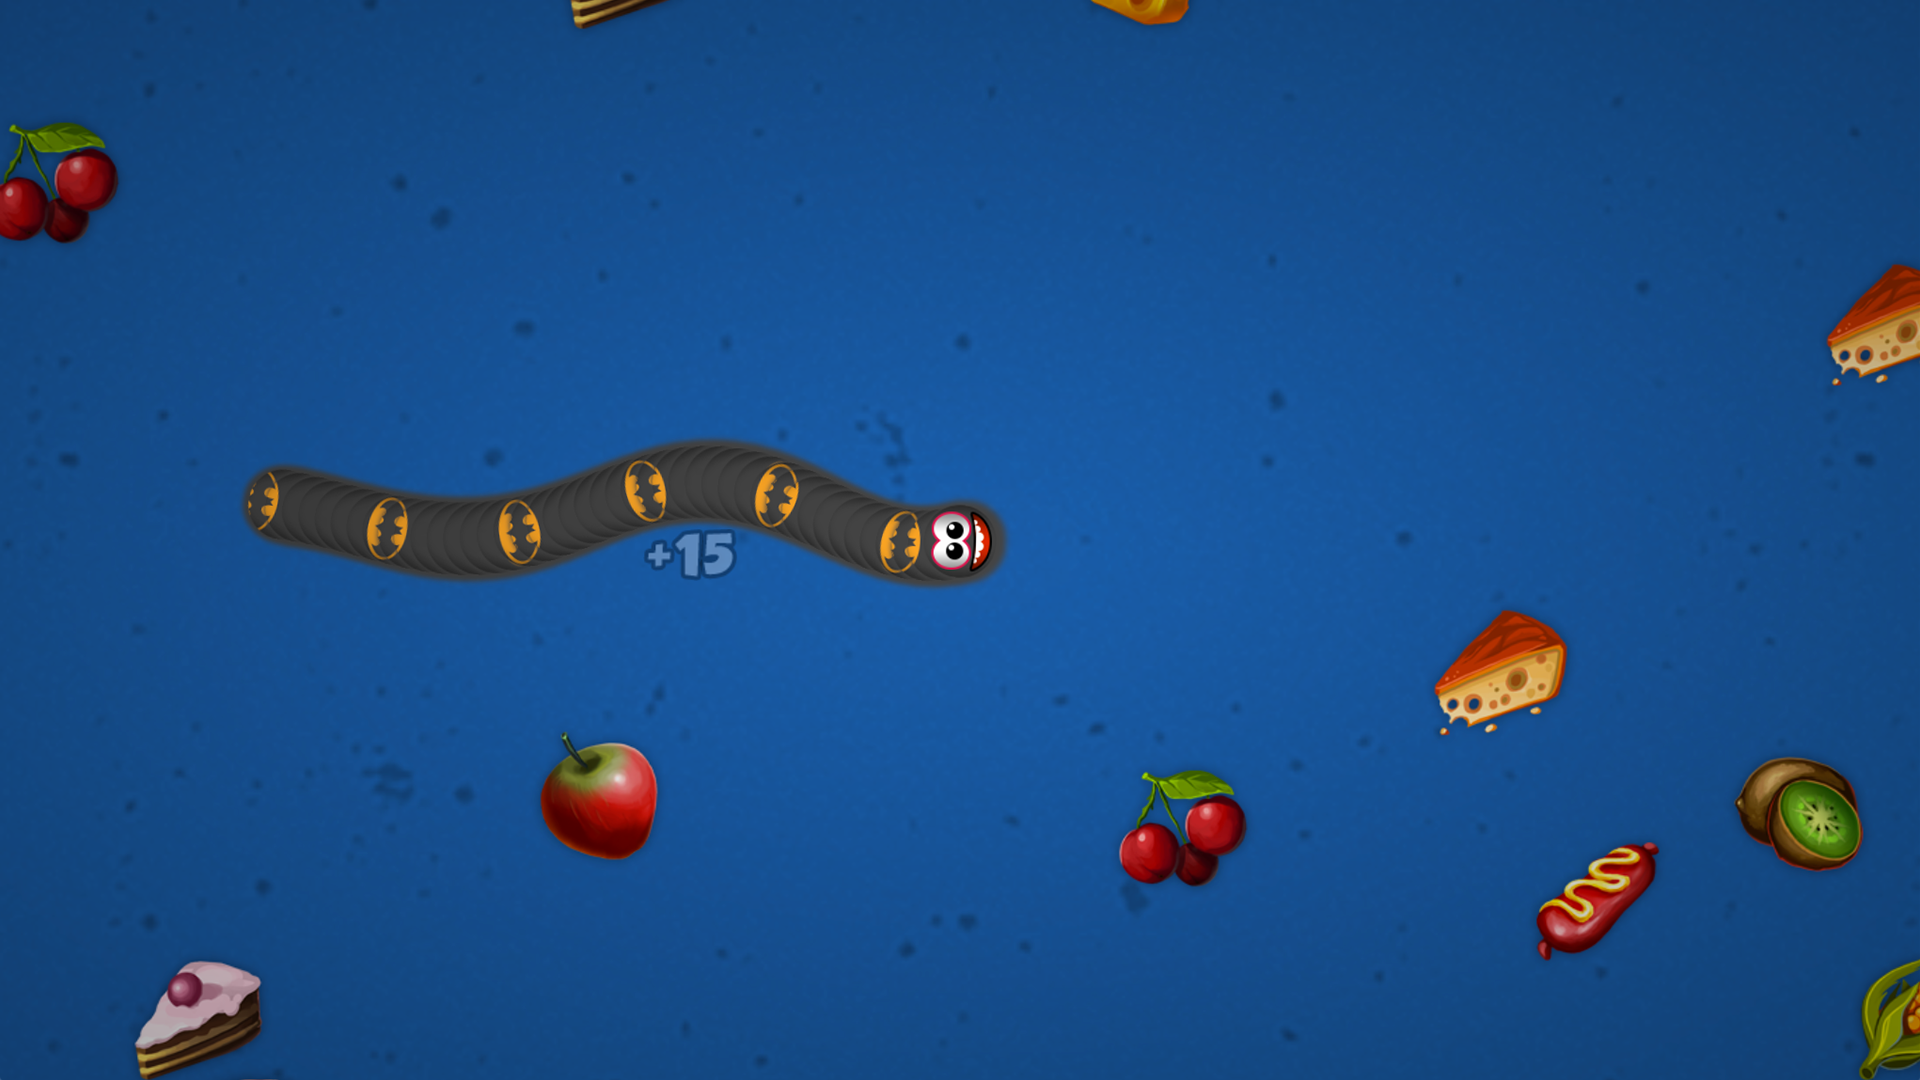 Worms Zone a Slithery Snake - Jogo Gratuito Online